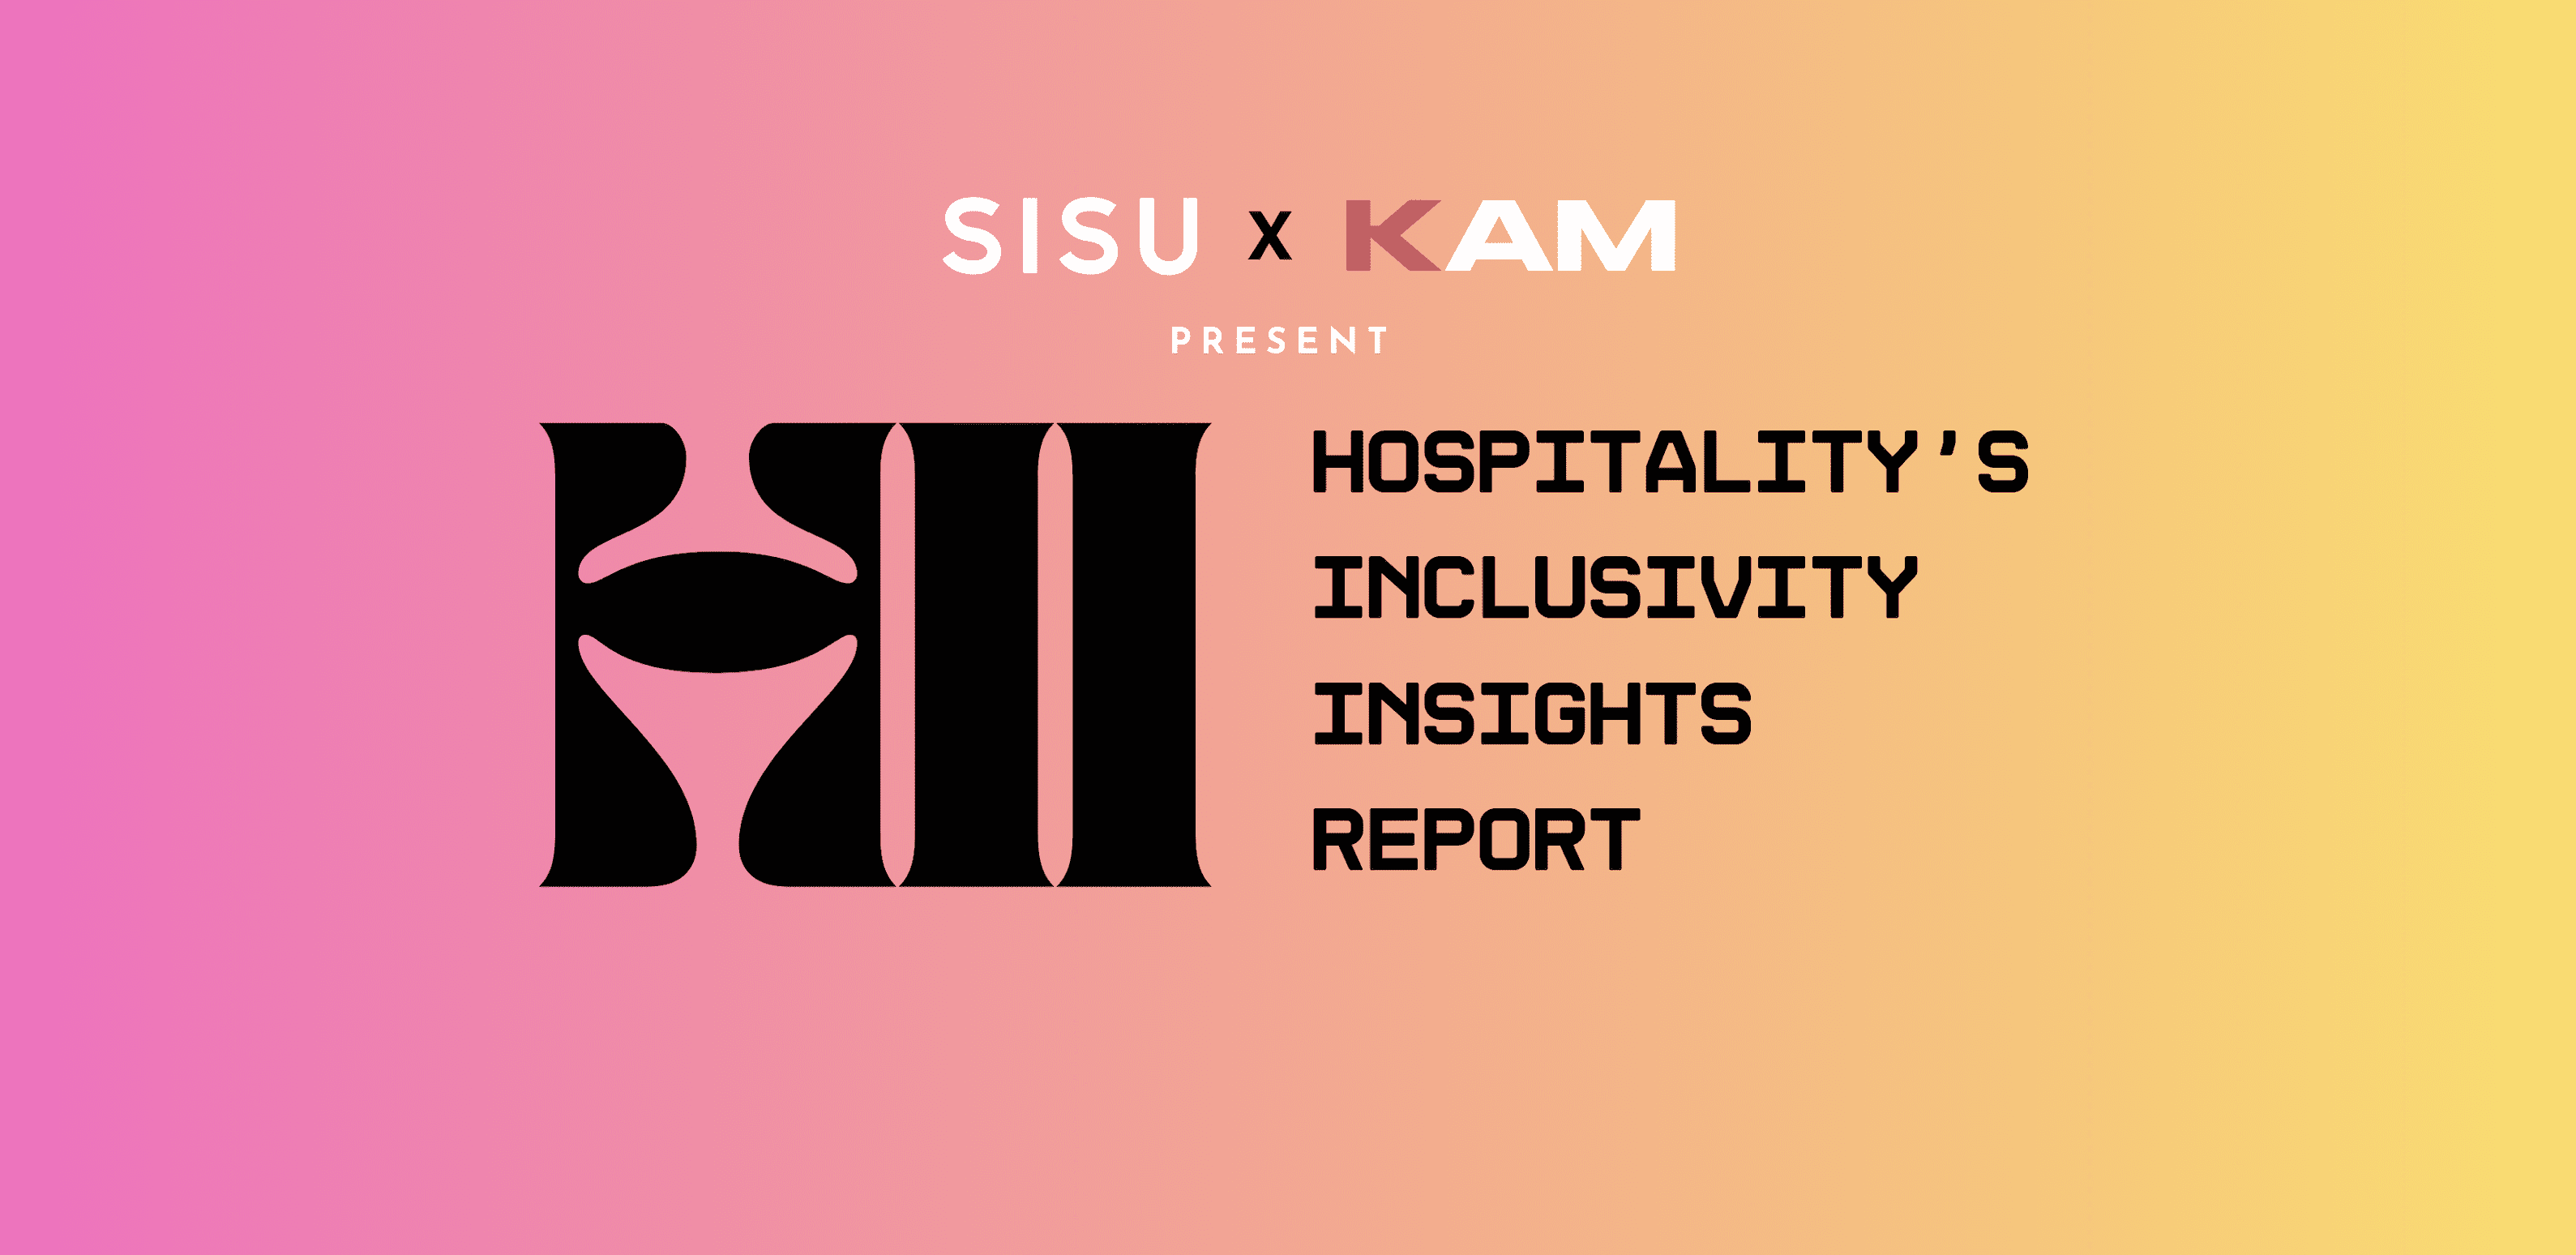 Hospitality Inclusivity Report